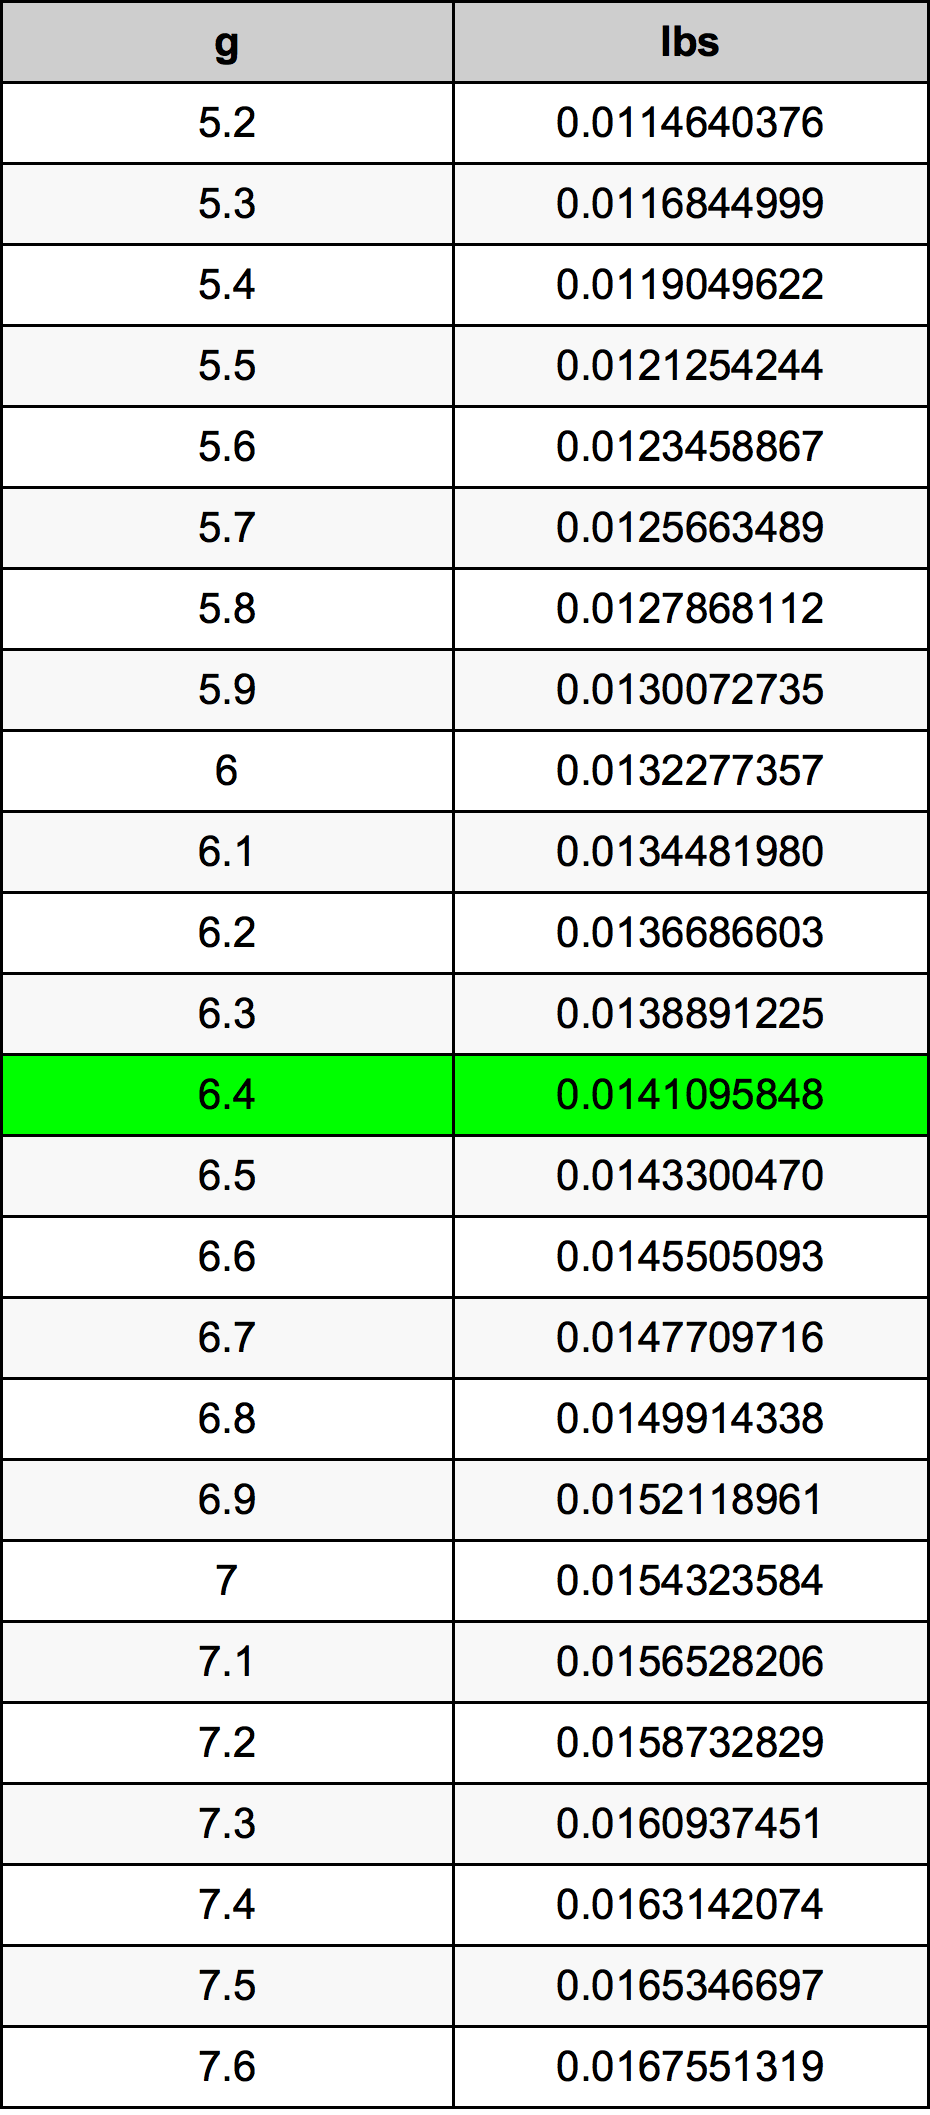 6.4 غرام جدول تحويل